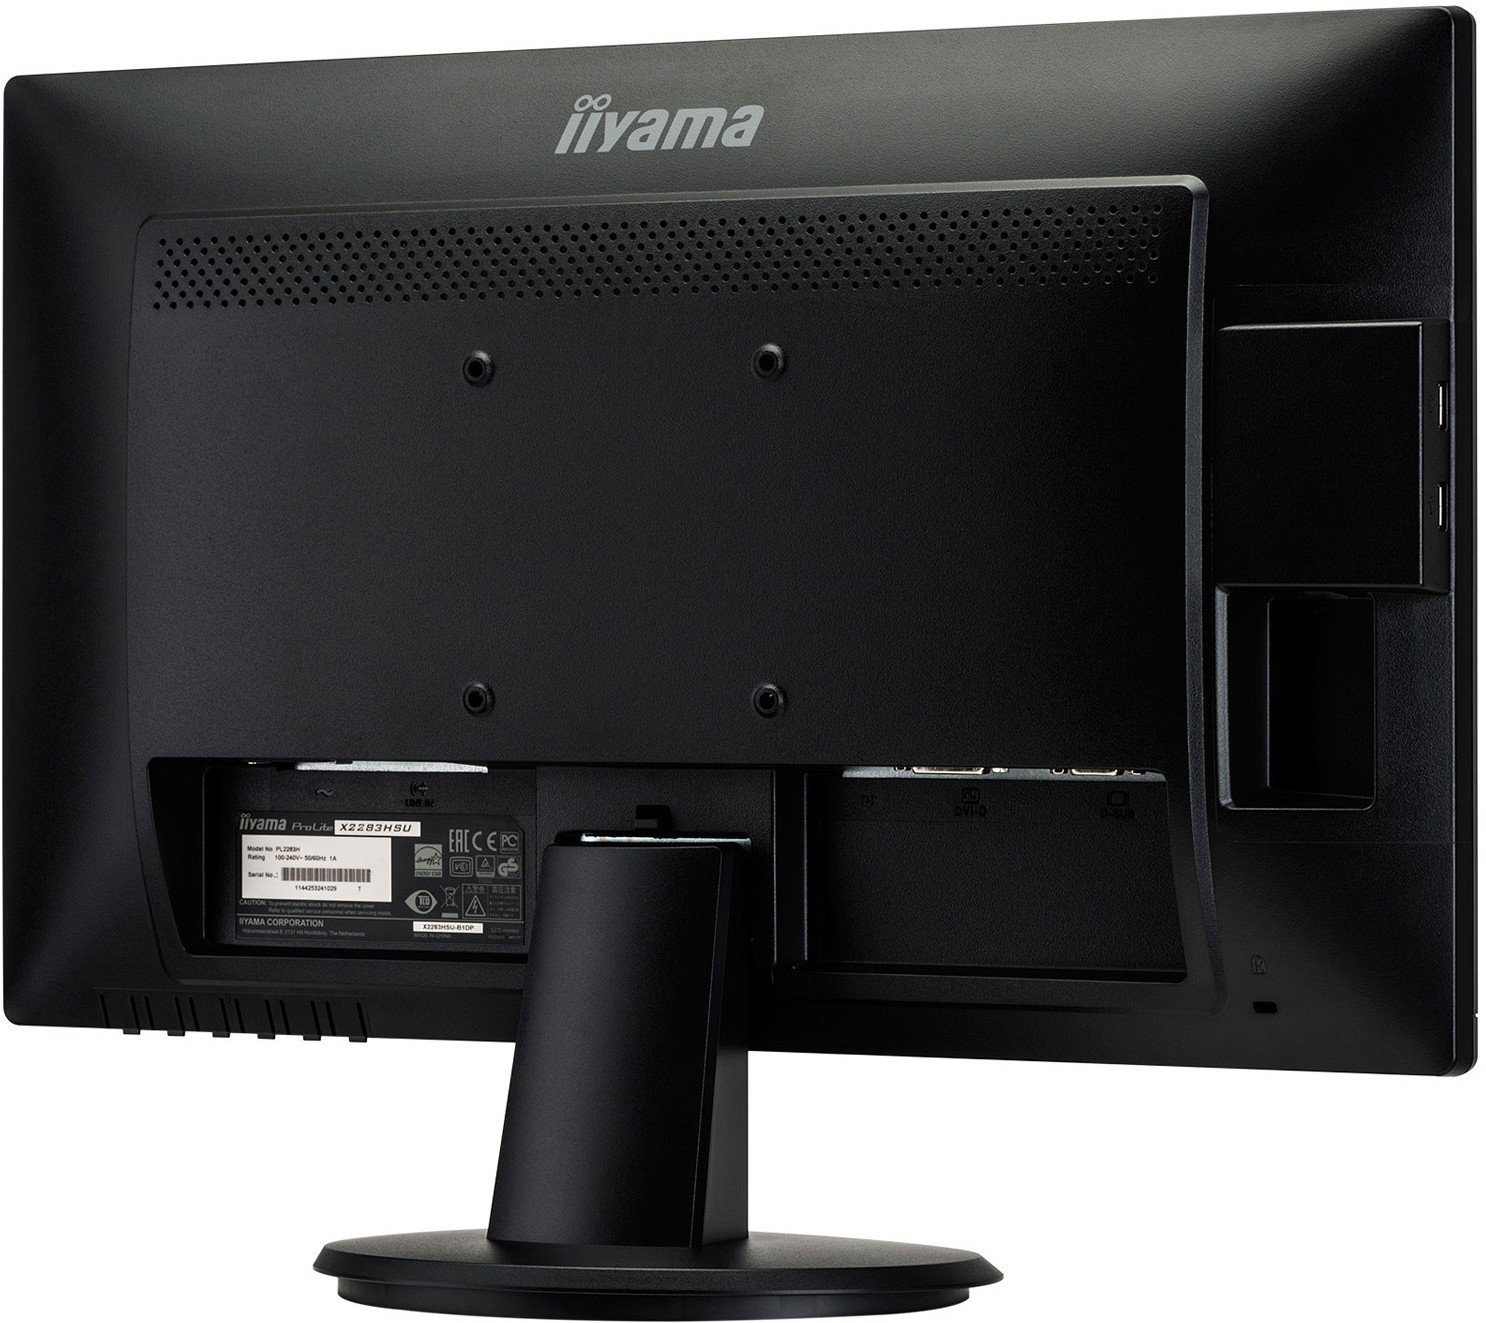 IIYAMA Ecran 22 pouces Full HD Prolite 5ms  - X2283HSU-B1